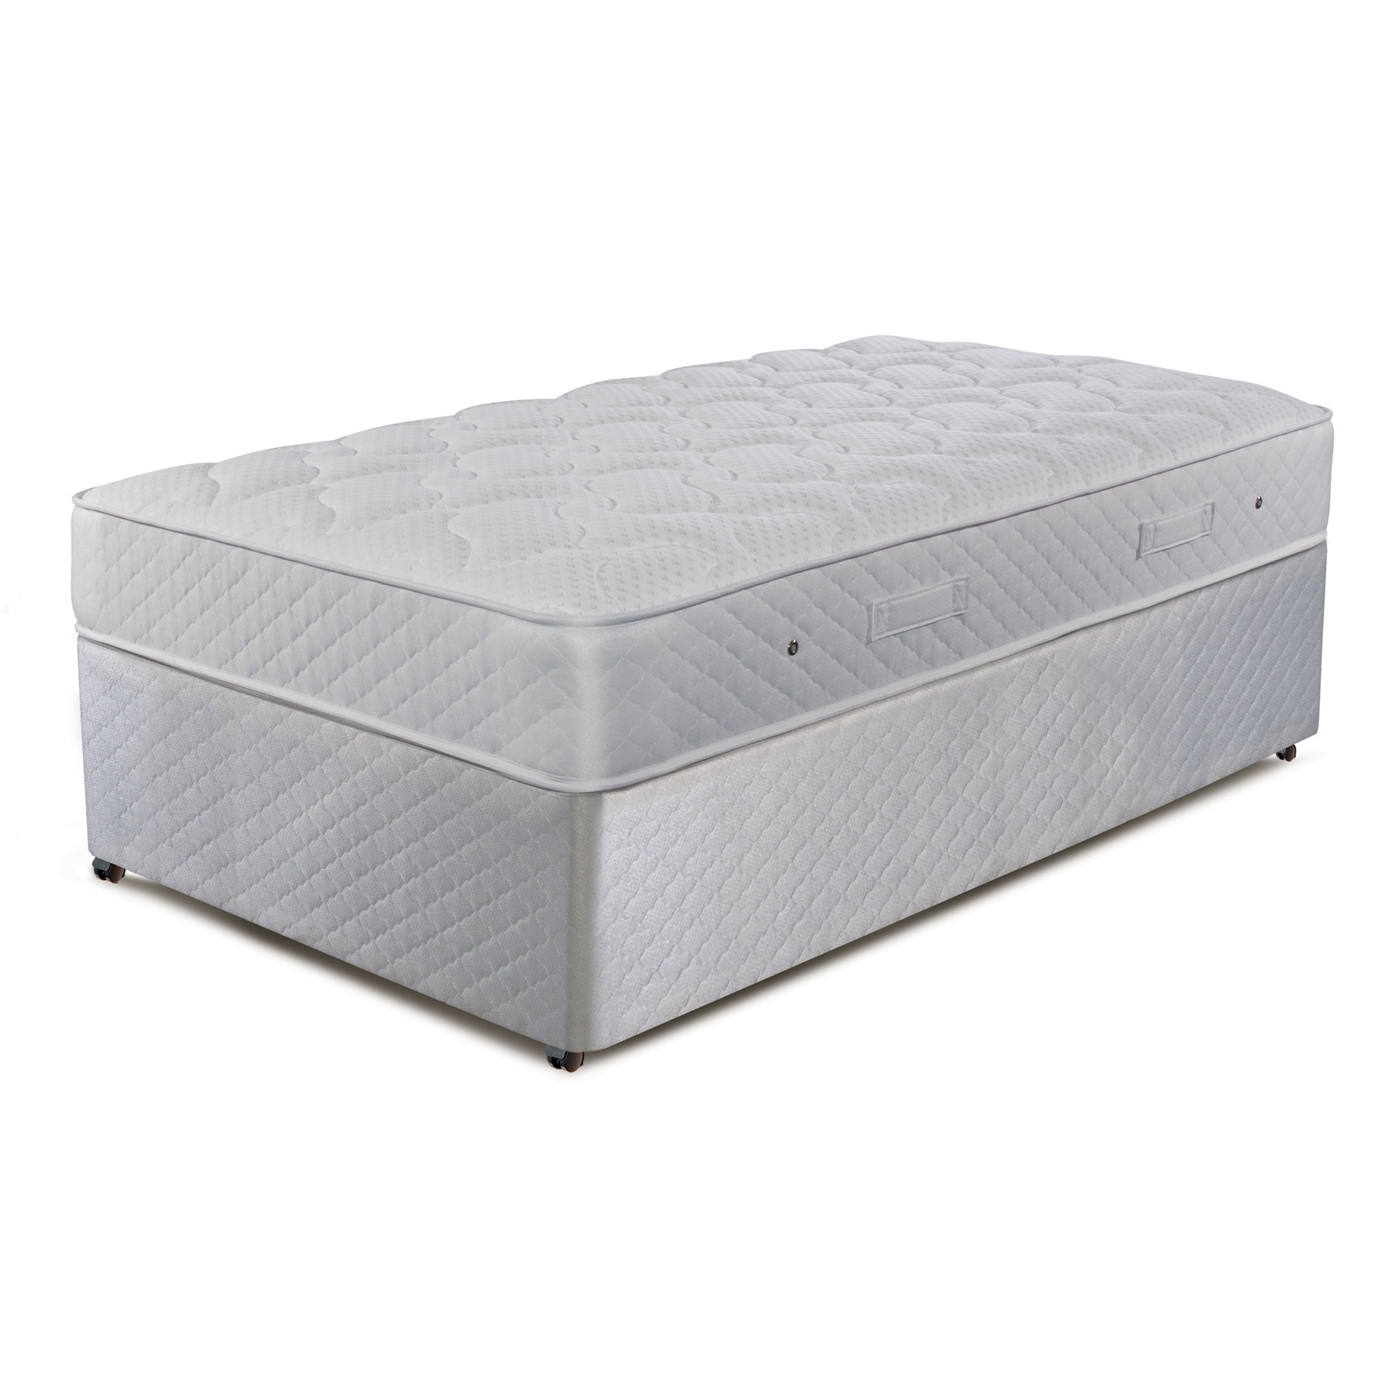 Simmons Technicool Memory 600 divan bed with memory foam mattress